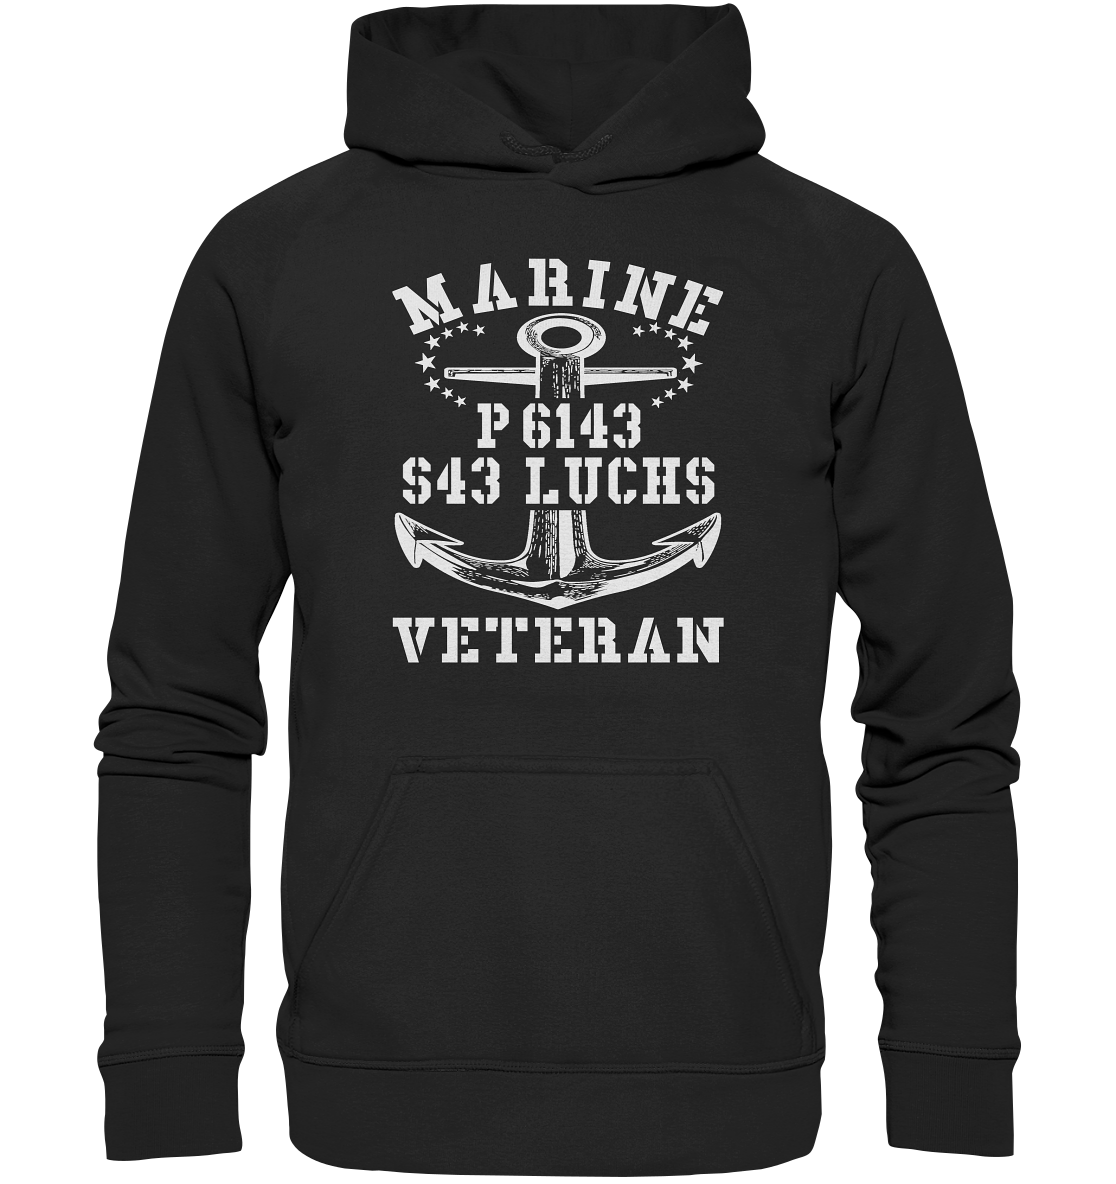 P6143 S43 LUCHS Marine Veteran - Basic Unisex Hoodie XL